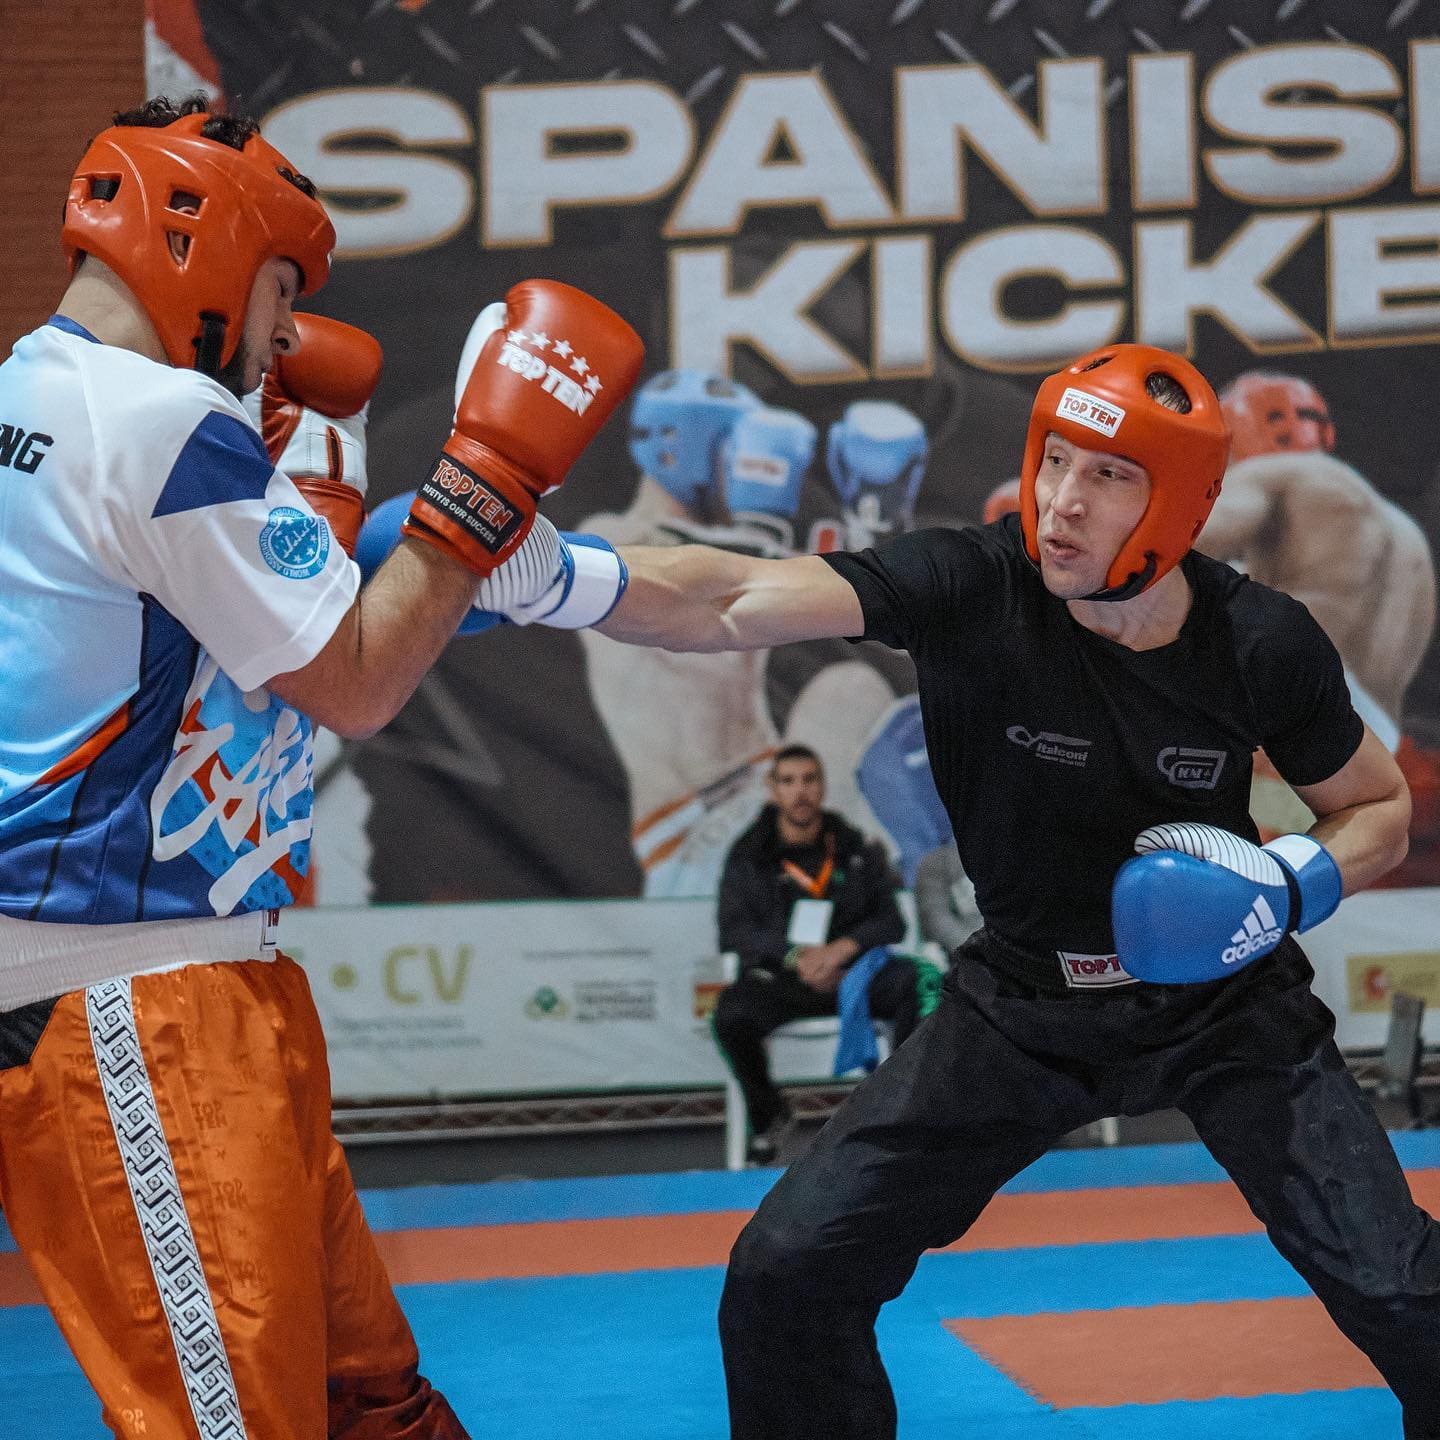 Benidorm, sede del ‘III Spanish Open Kickboxing’ que se disputará en el Palau d’Esports